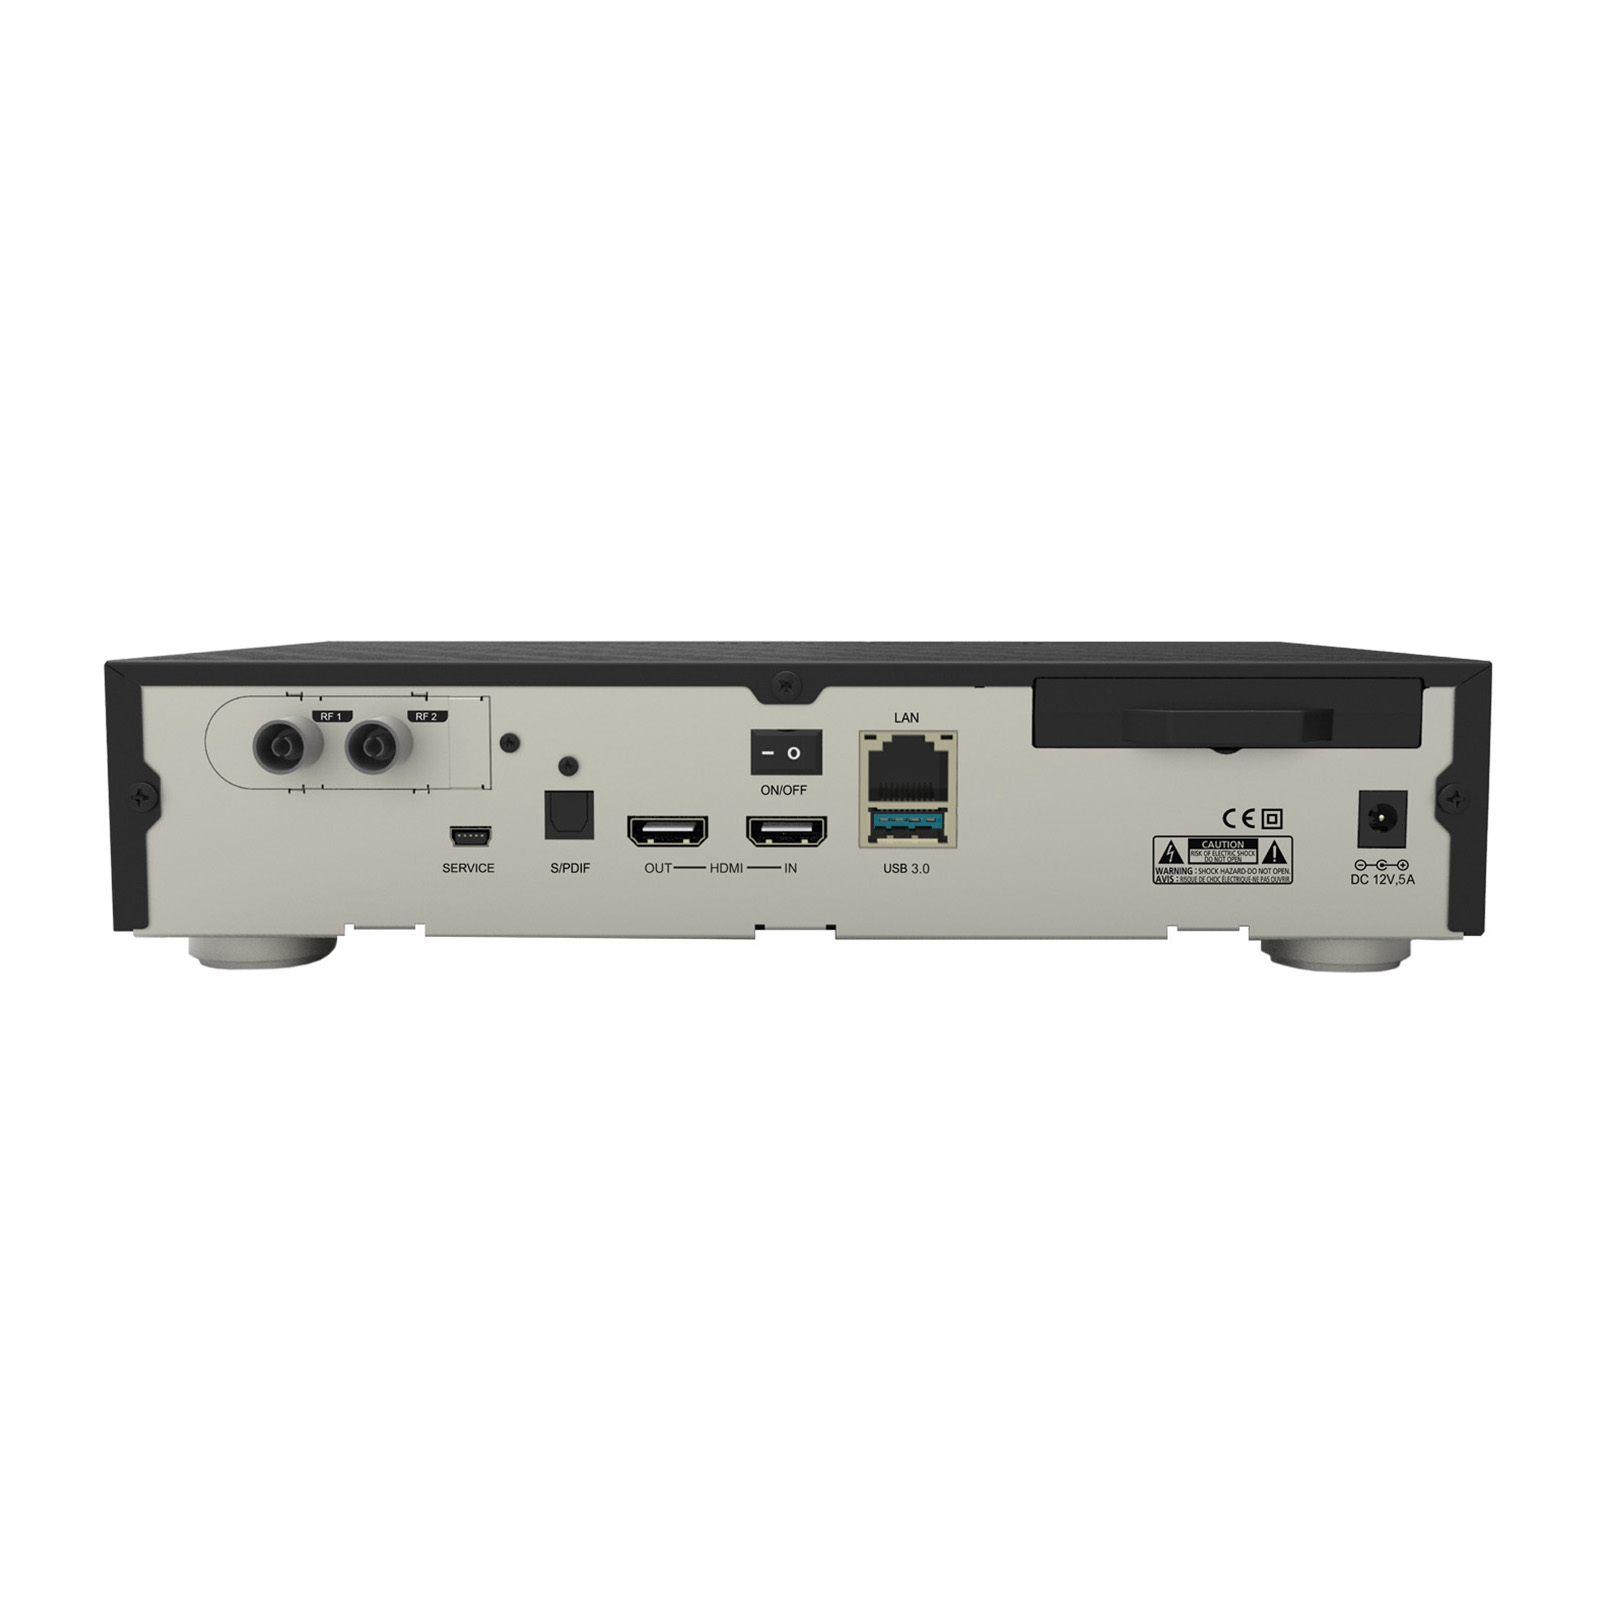 2TB MULTIMEDIA 1xDVB-C/T2 DM900 RC20 Schwarz) Kabel-Receiver (PVR-Funktion, Twin Tuner, DREAM